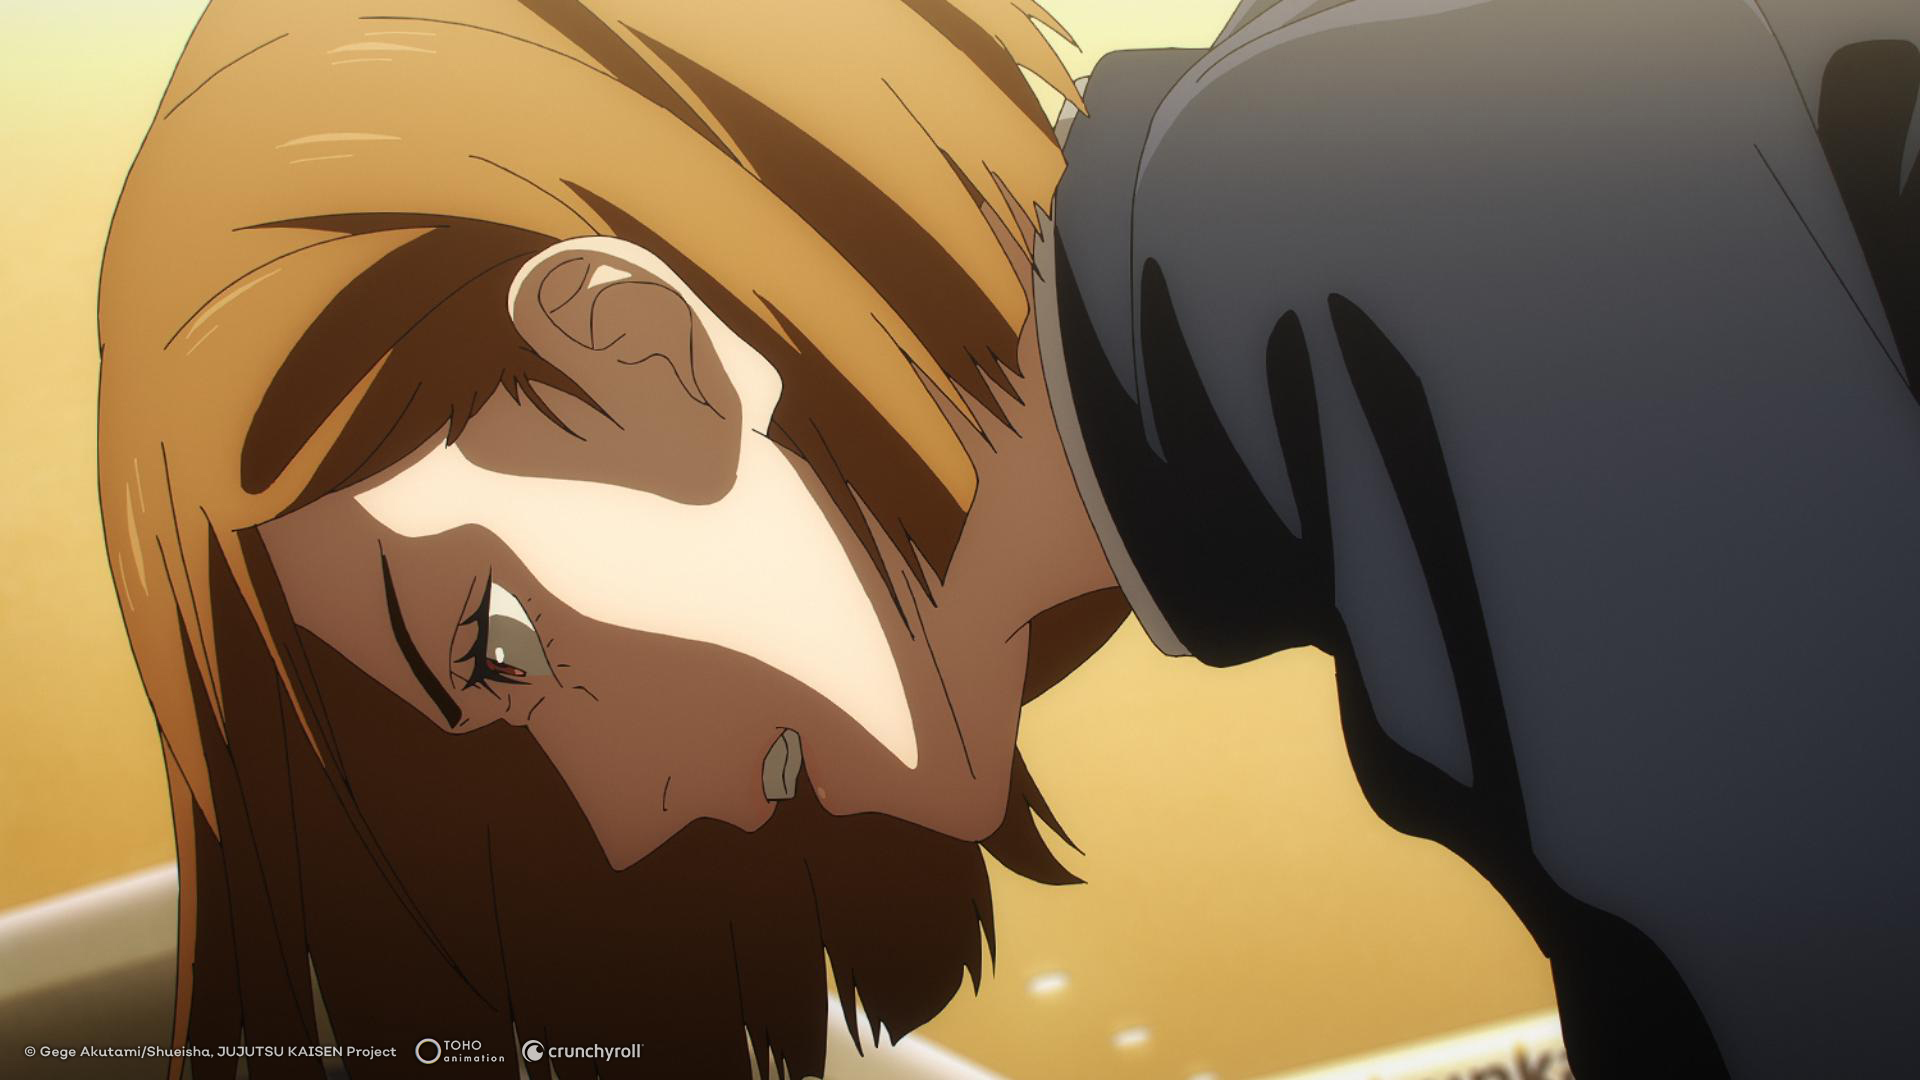 The anime character Nobara Kugisaki is hunched over during the show "Jujutsu Kaisen."